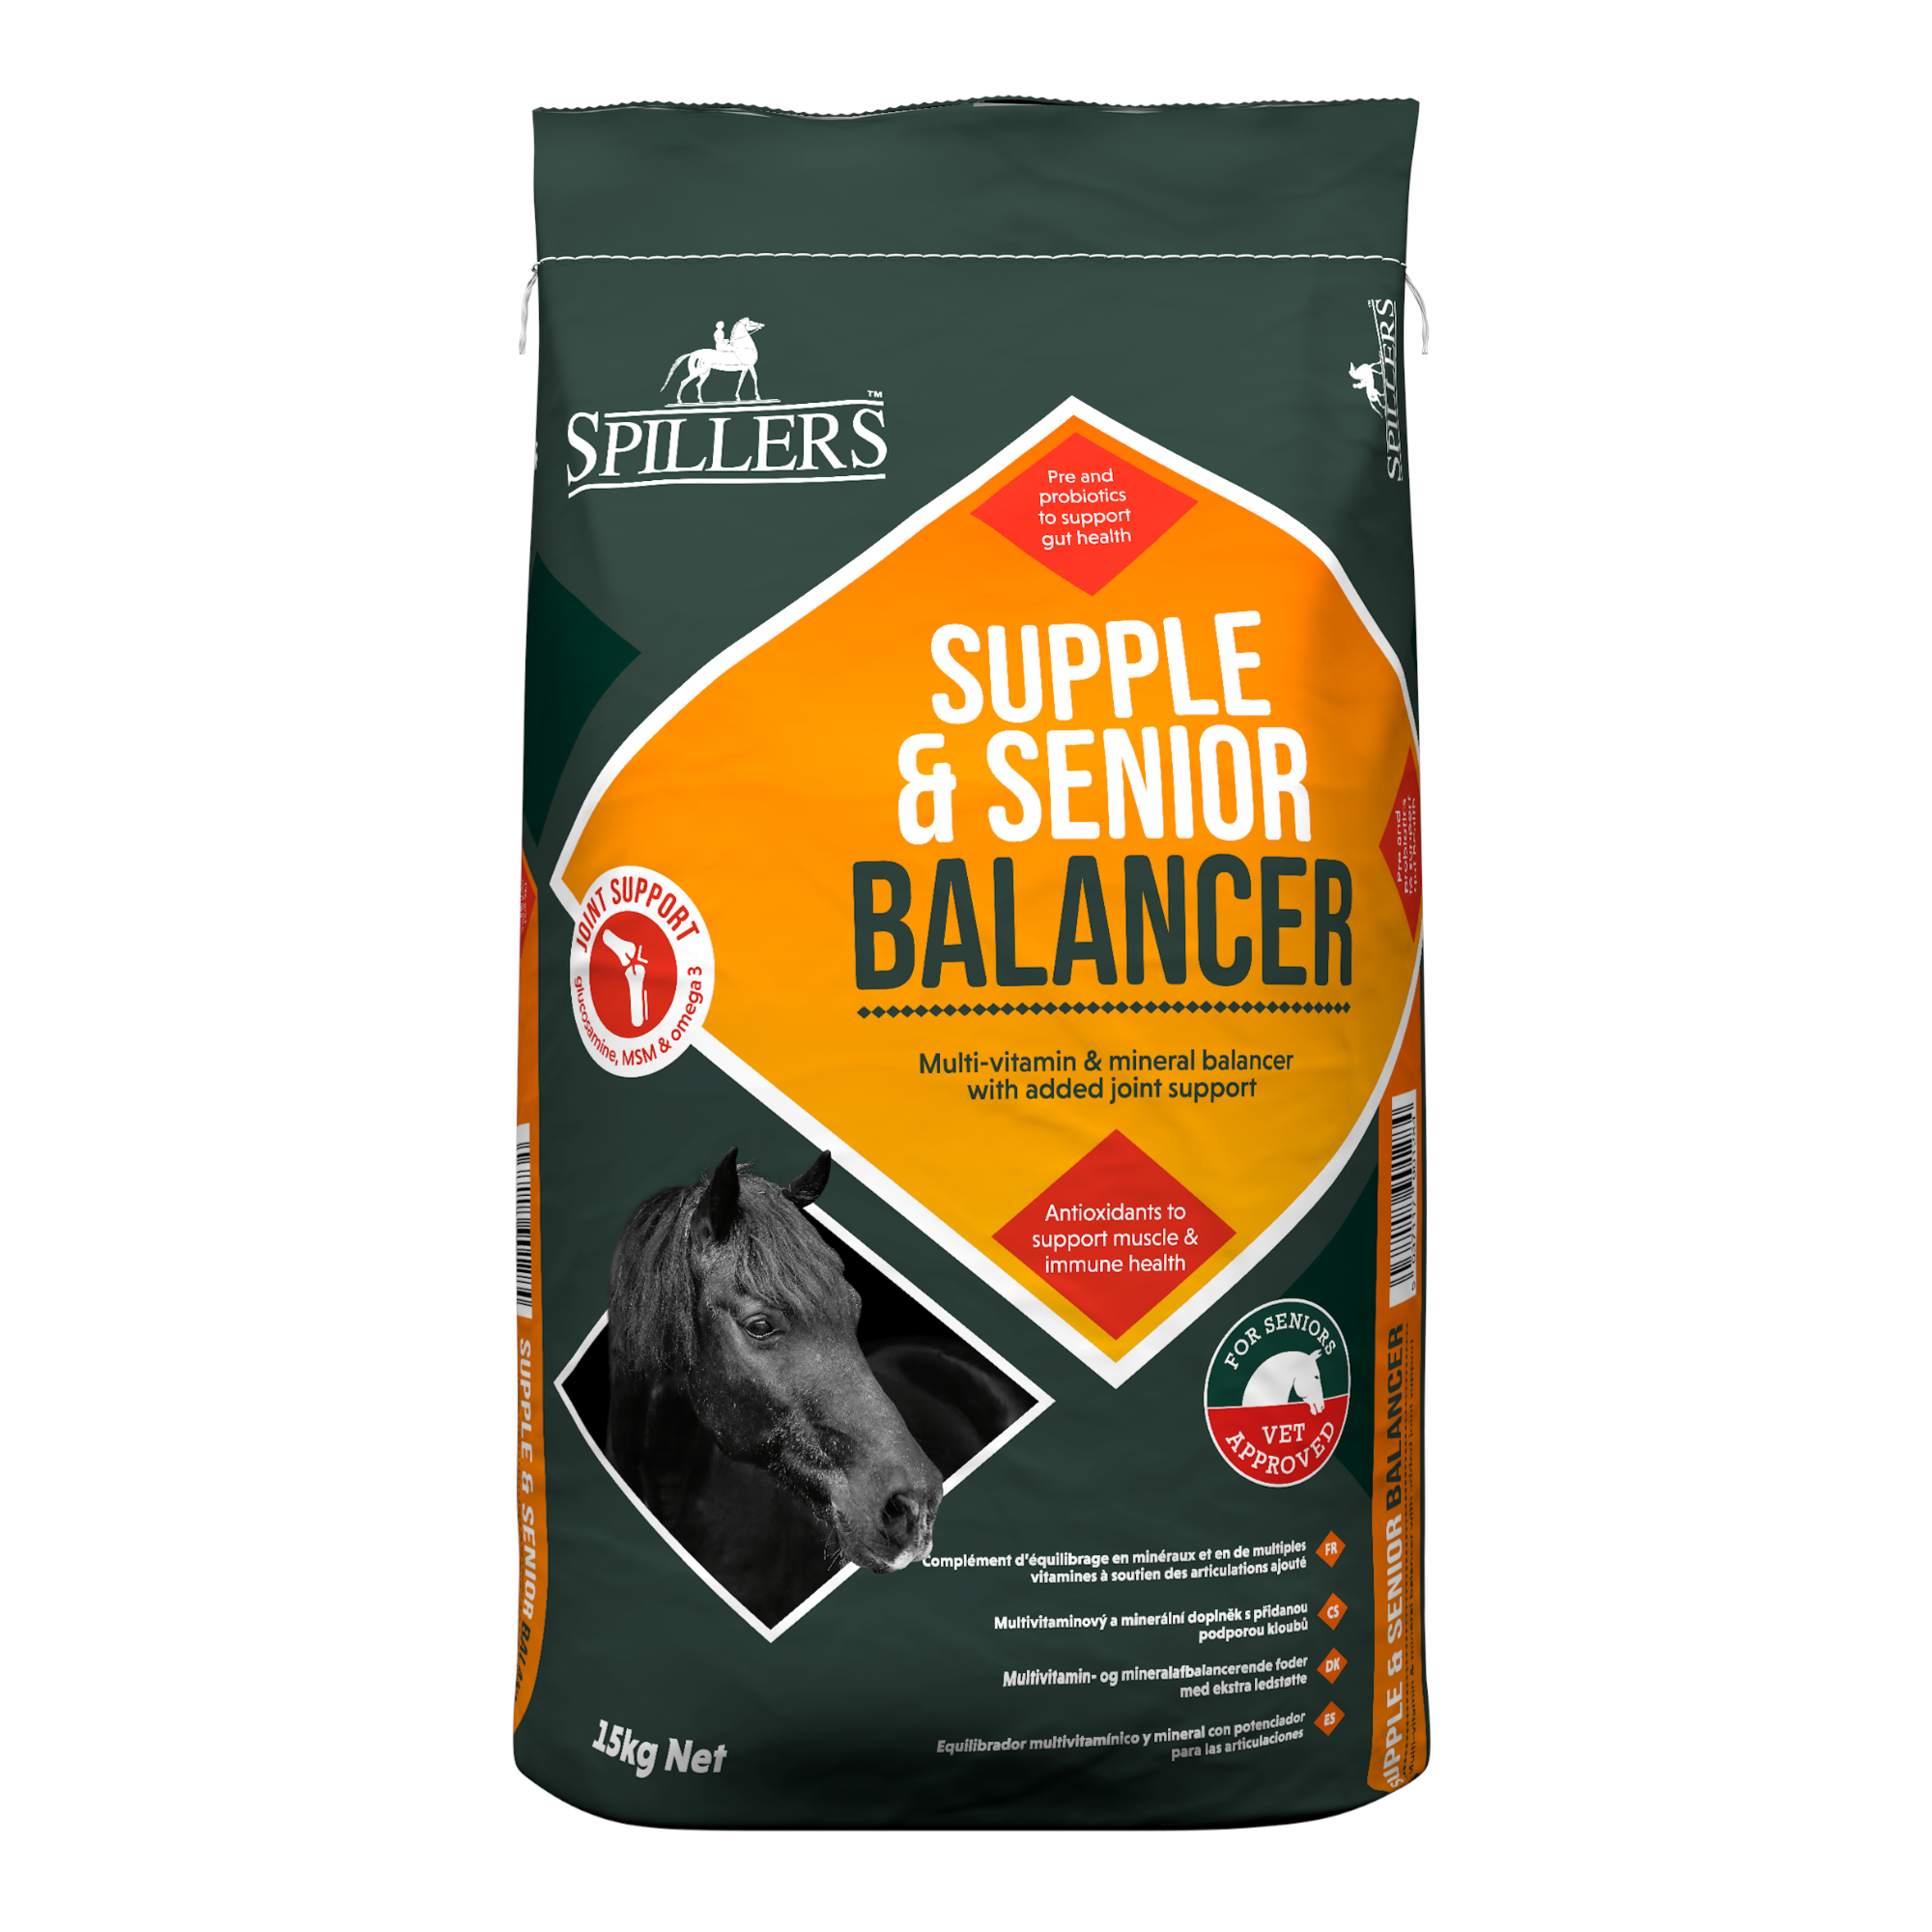 Spillers Supple & Senior Balancer 1